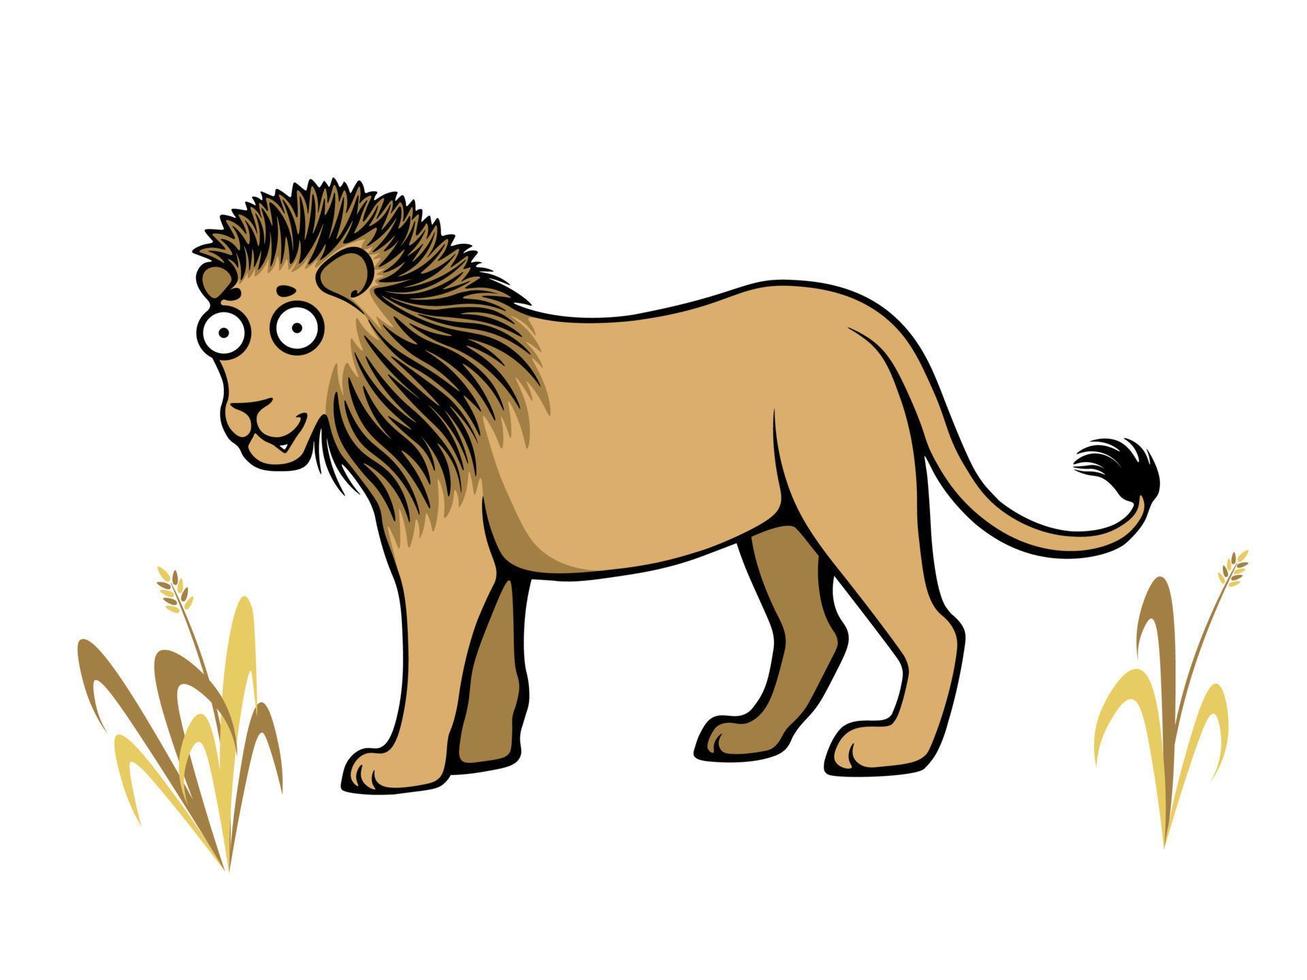 Cute carefree lion walking through dry grass vector